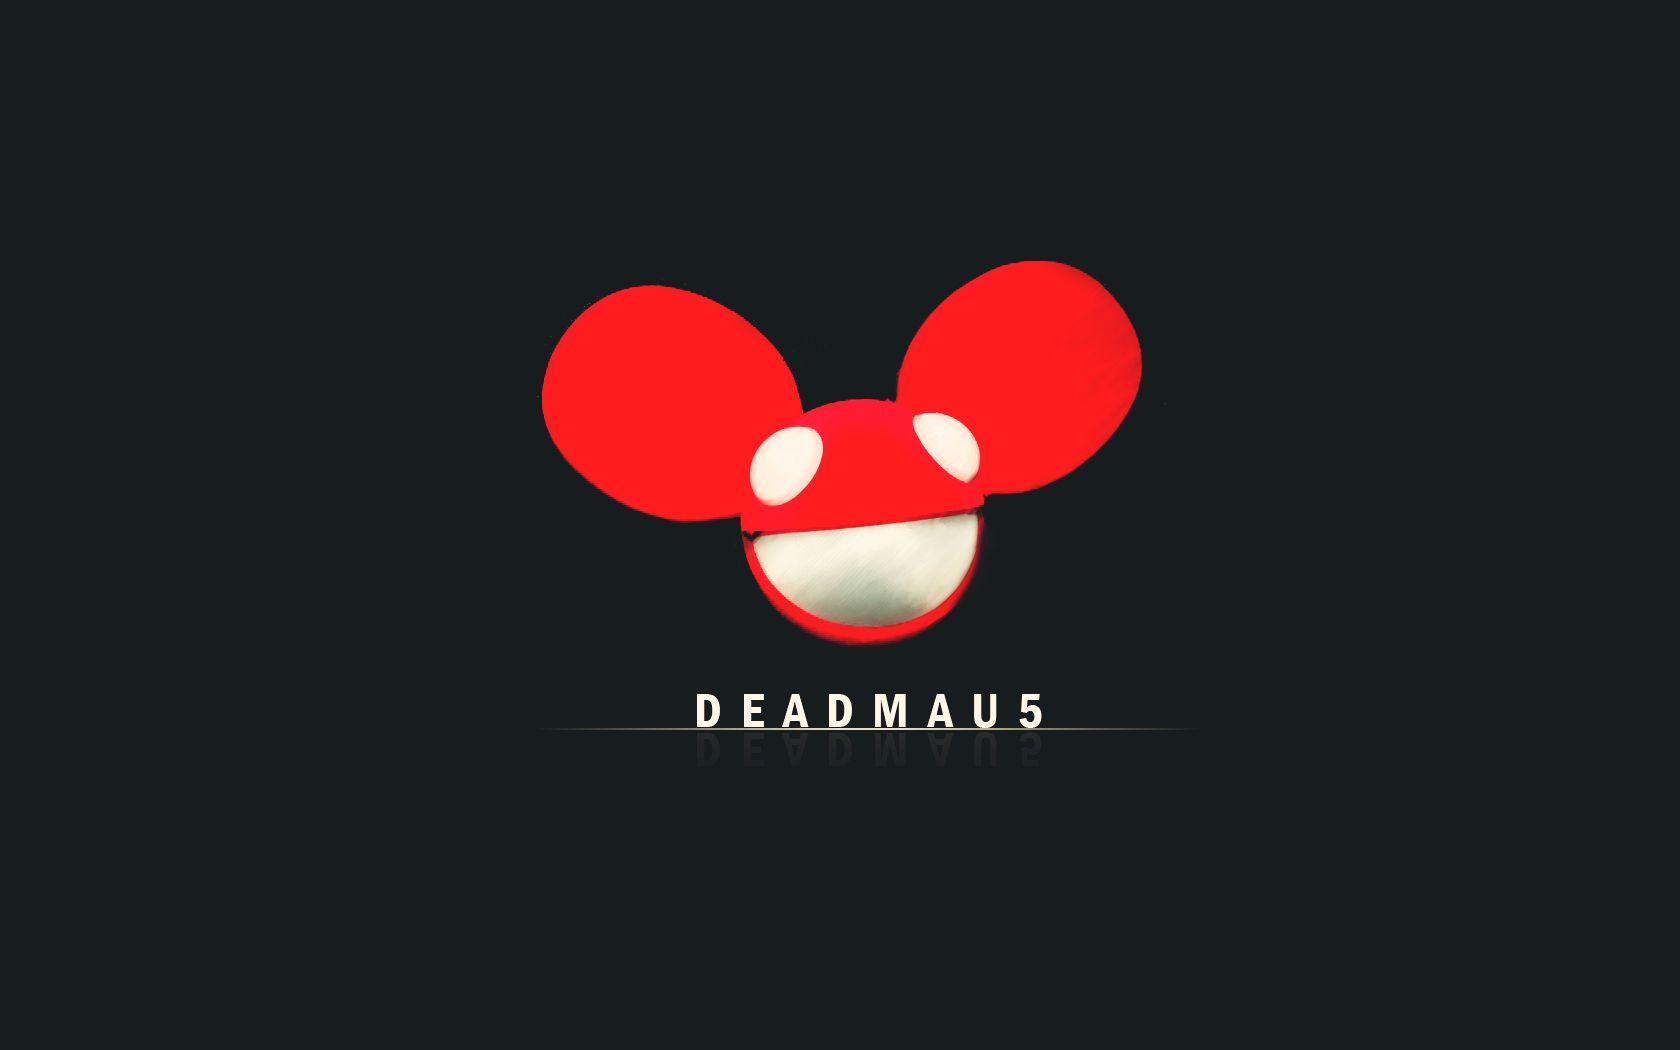 Deadmau5 Image 13202 Background. fullhdimage